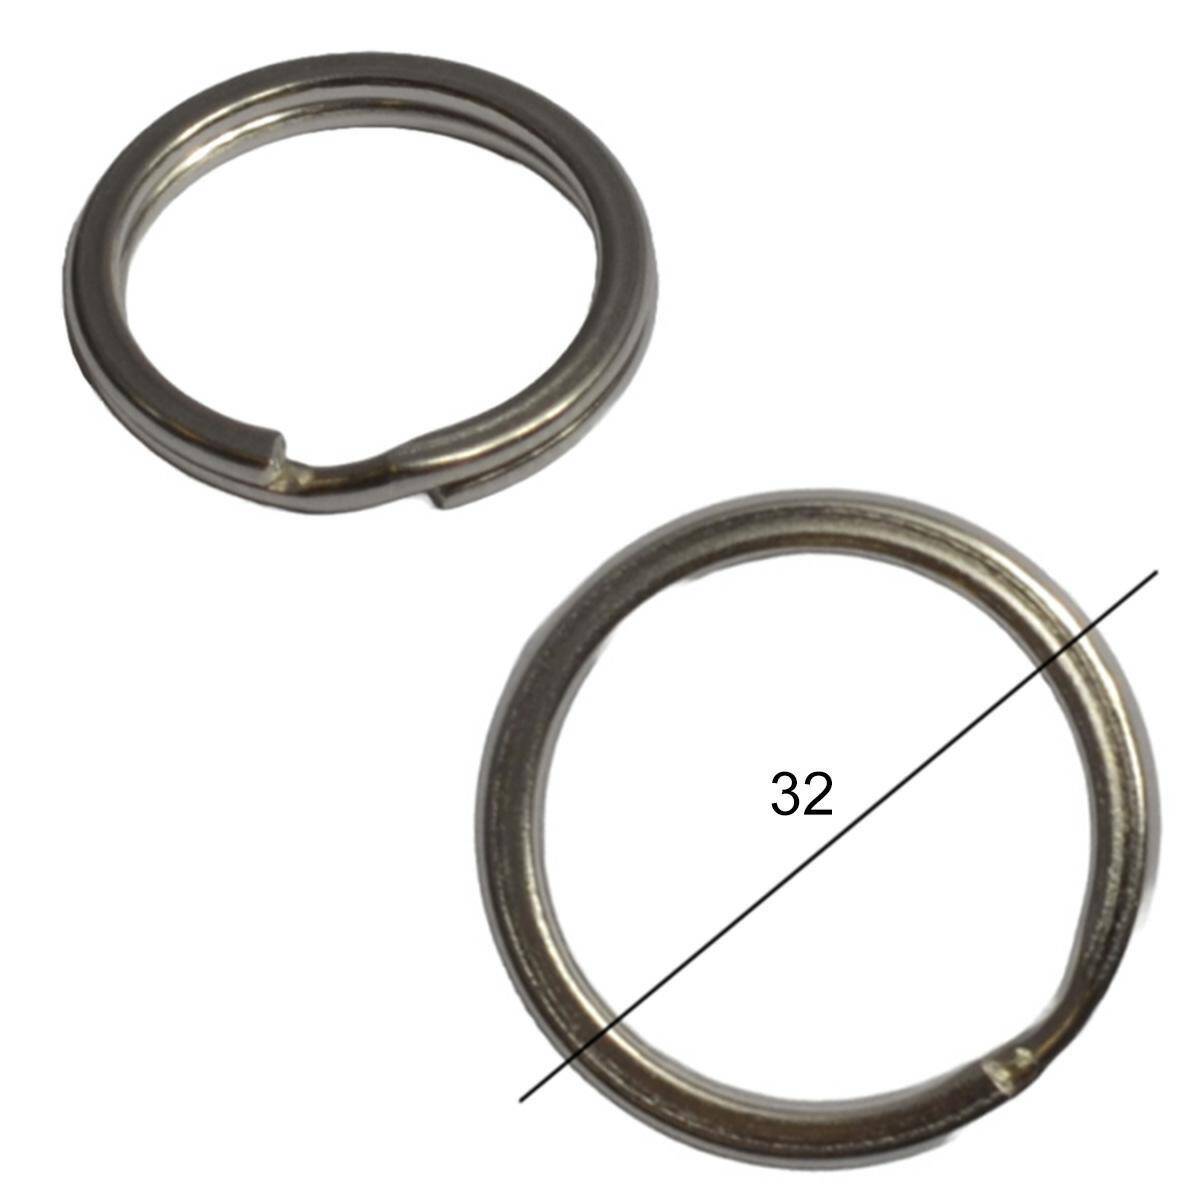 Key rings - flat - 32 mm